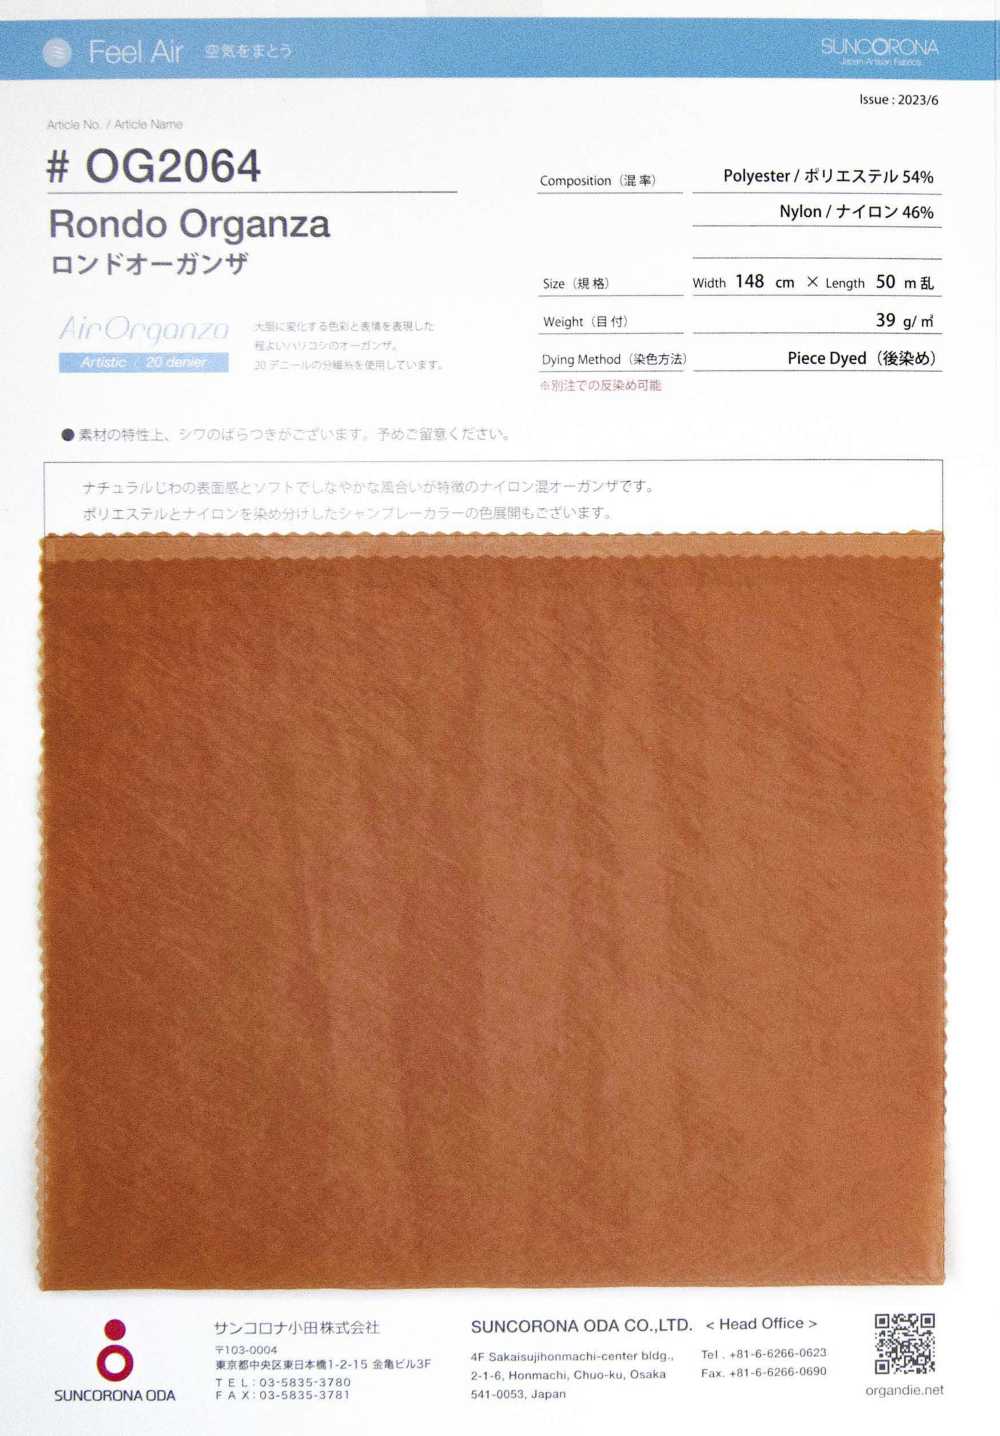 OG2064 Rondo Organza[Textilgewebe] Suncorona Oda